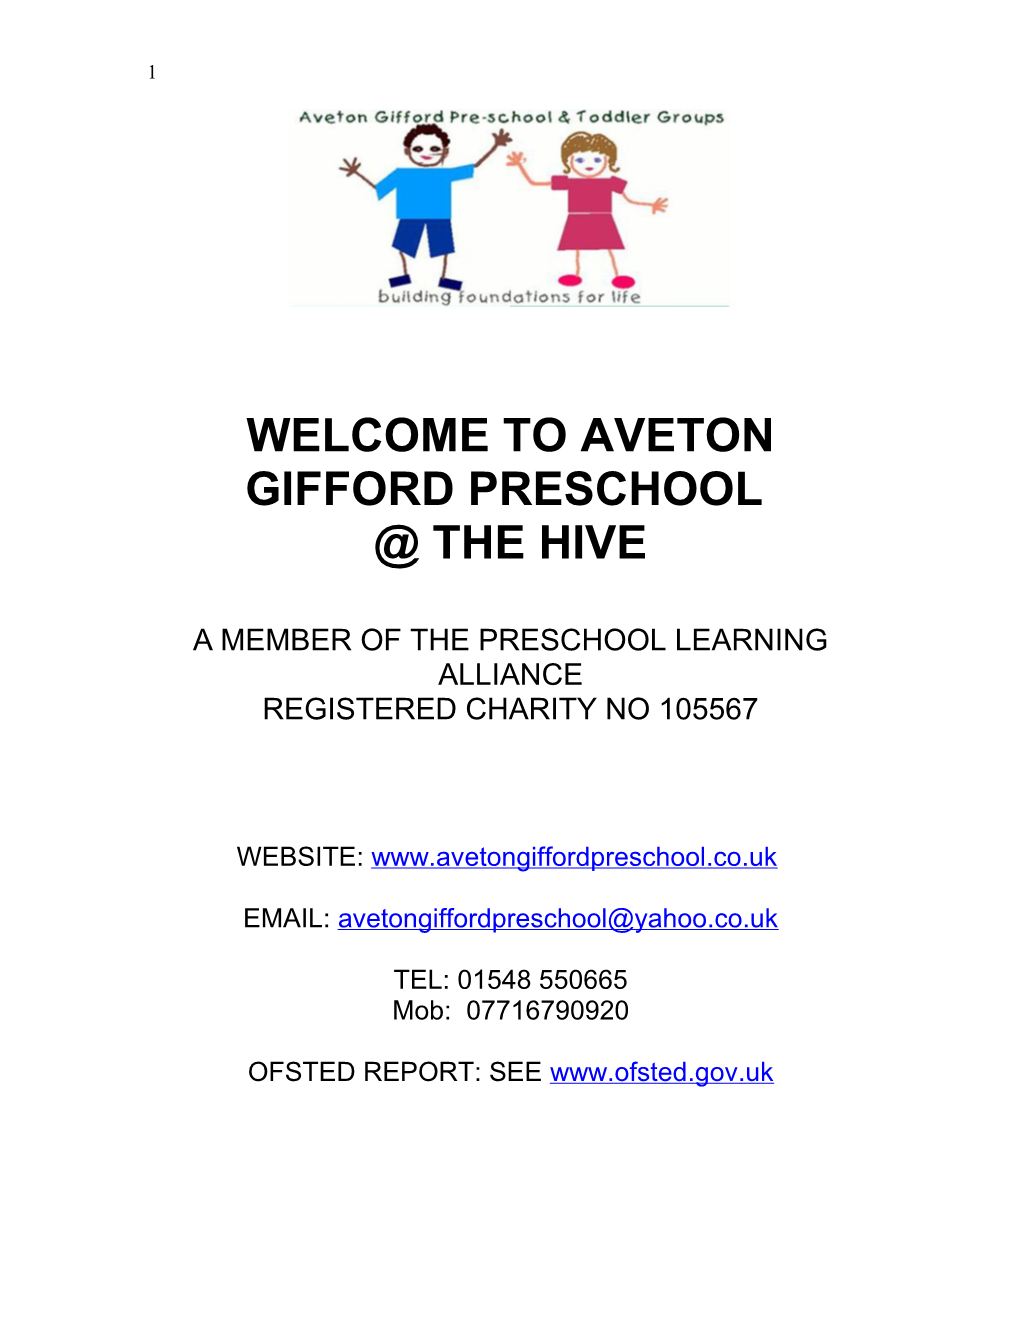 Welcome to Aveton Gifford Preschool